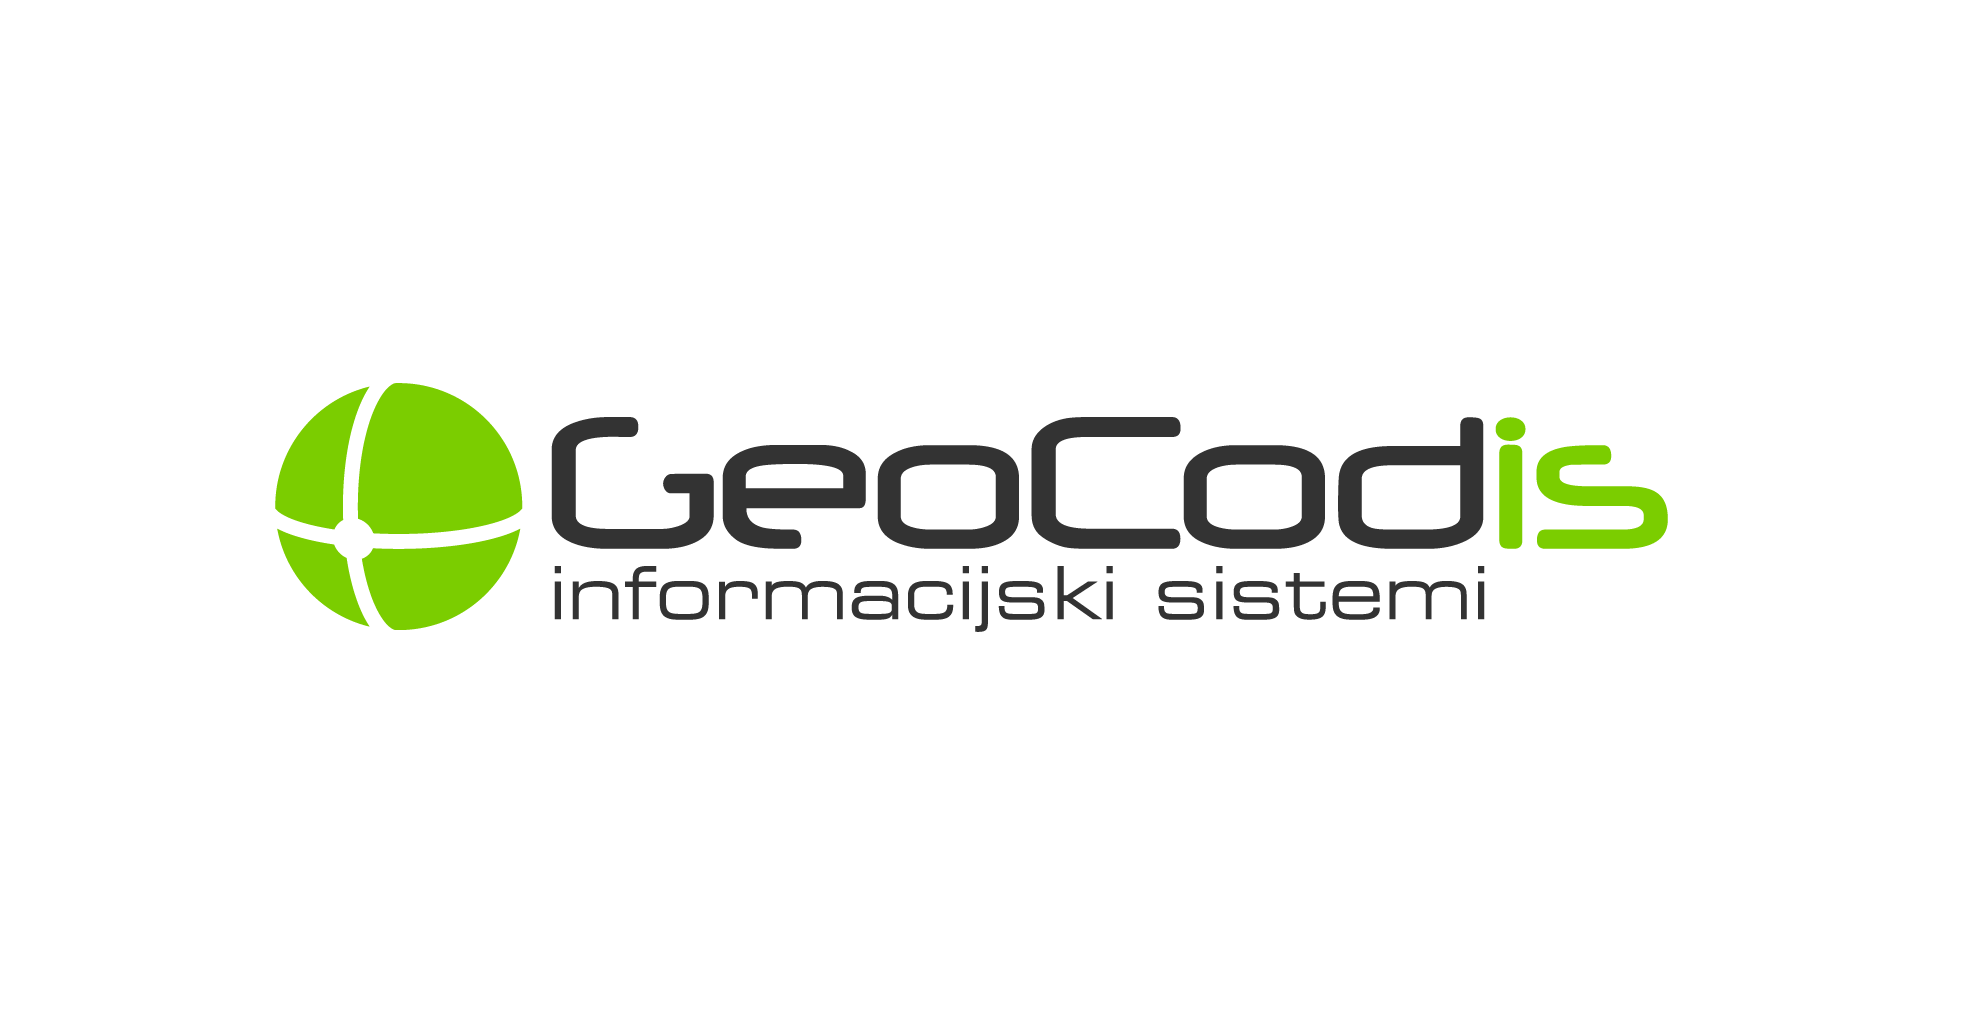 Podjetje Geocodis